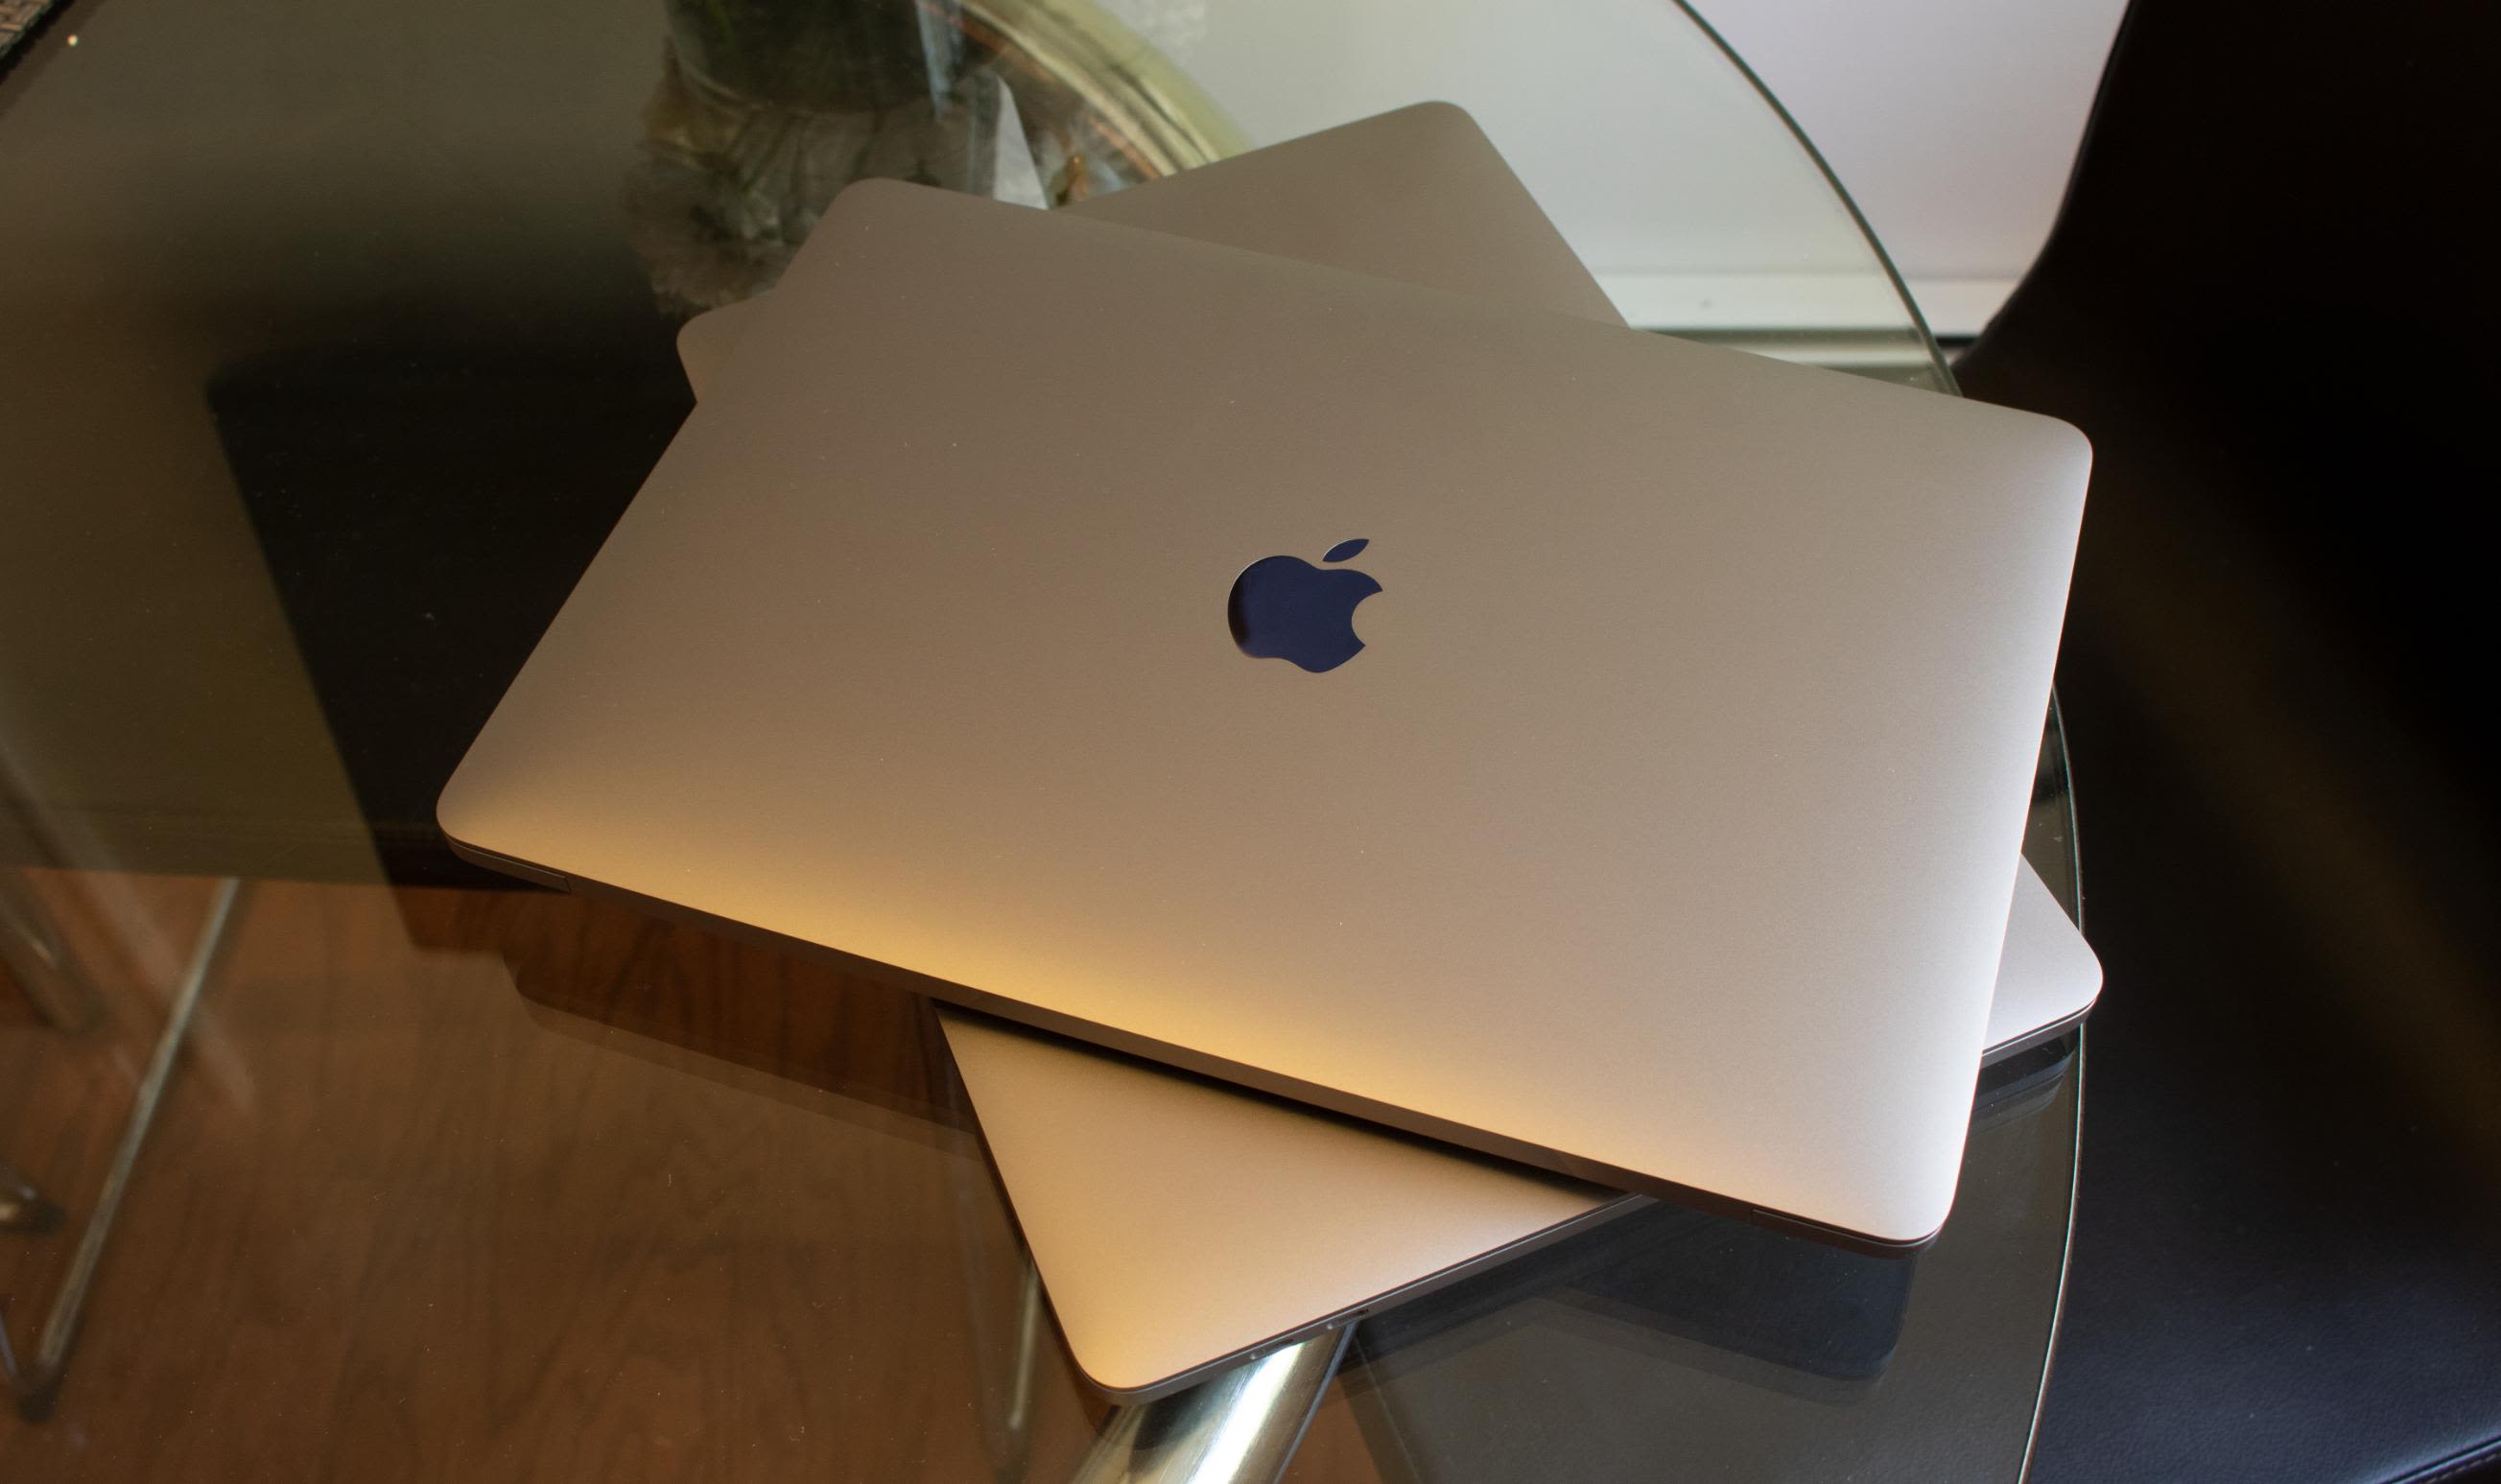 MacBook Pro review: overkill - digitec